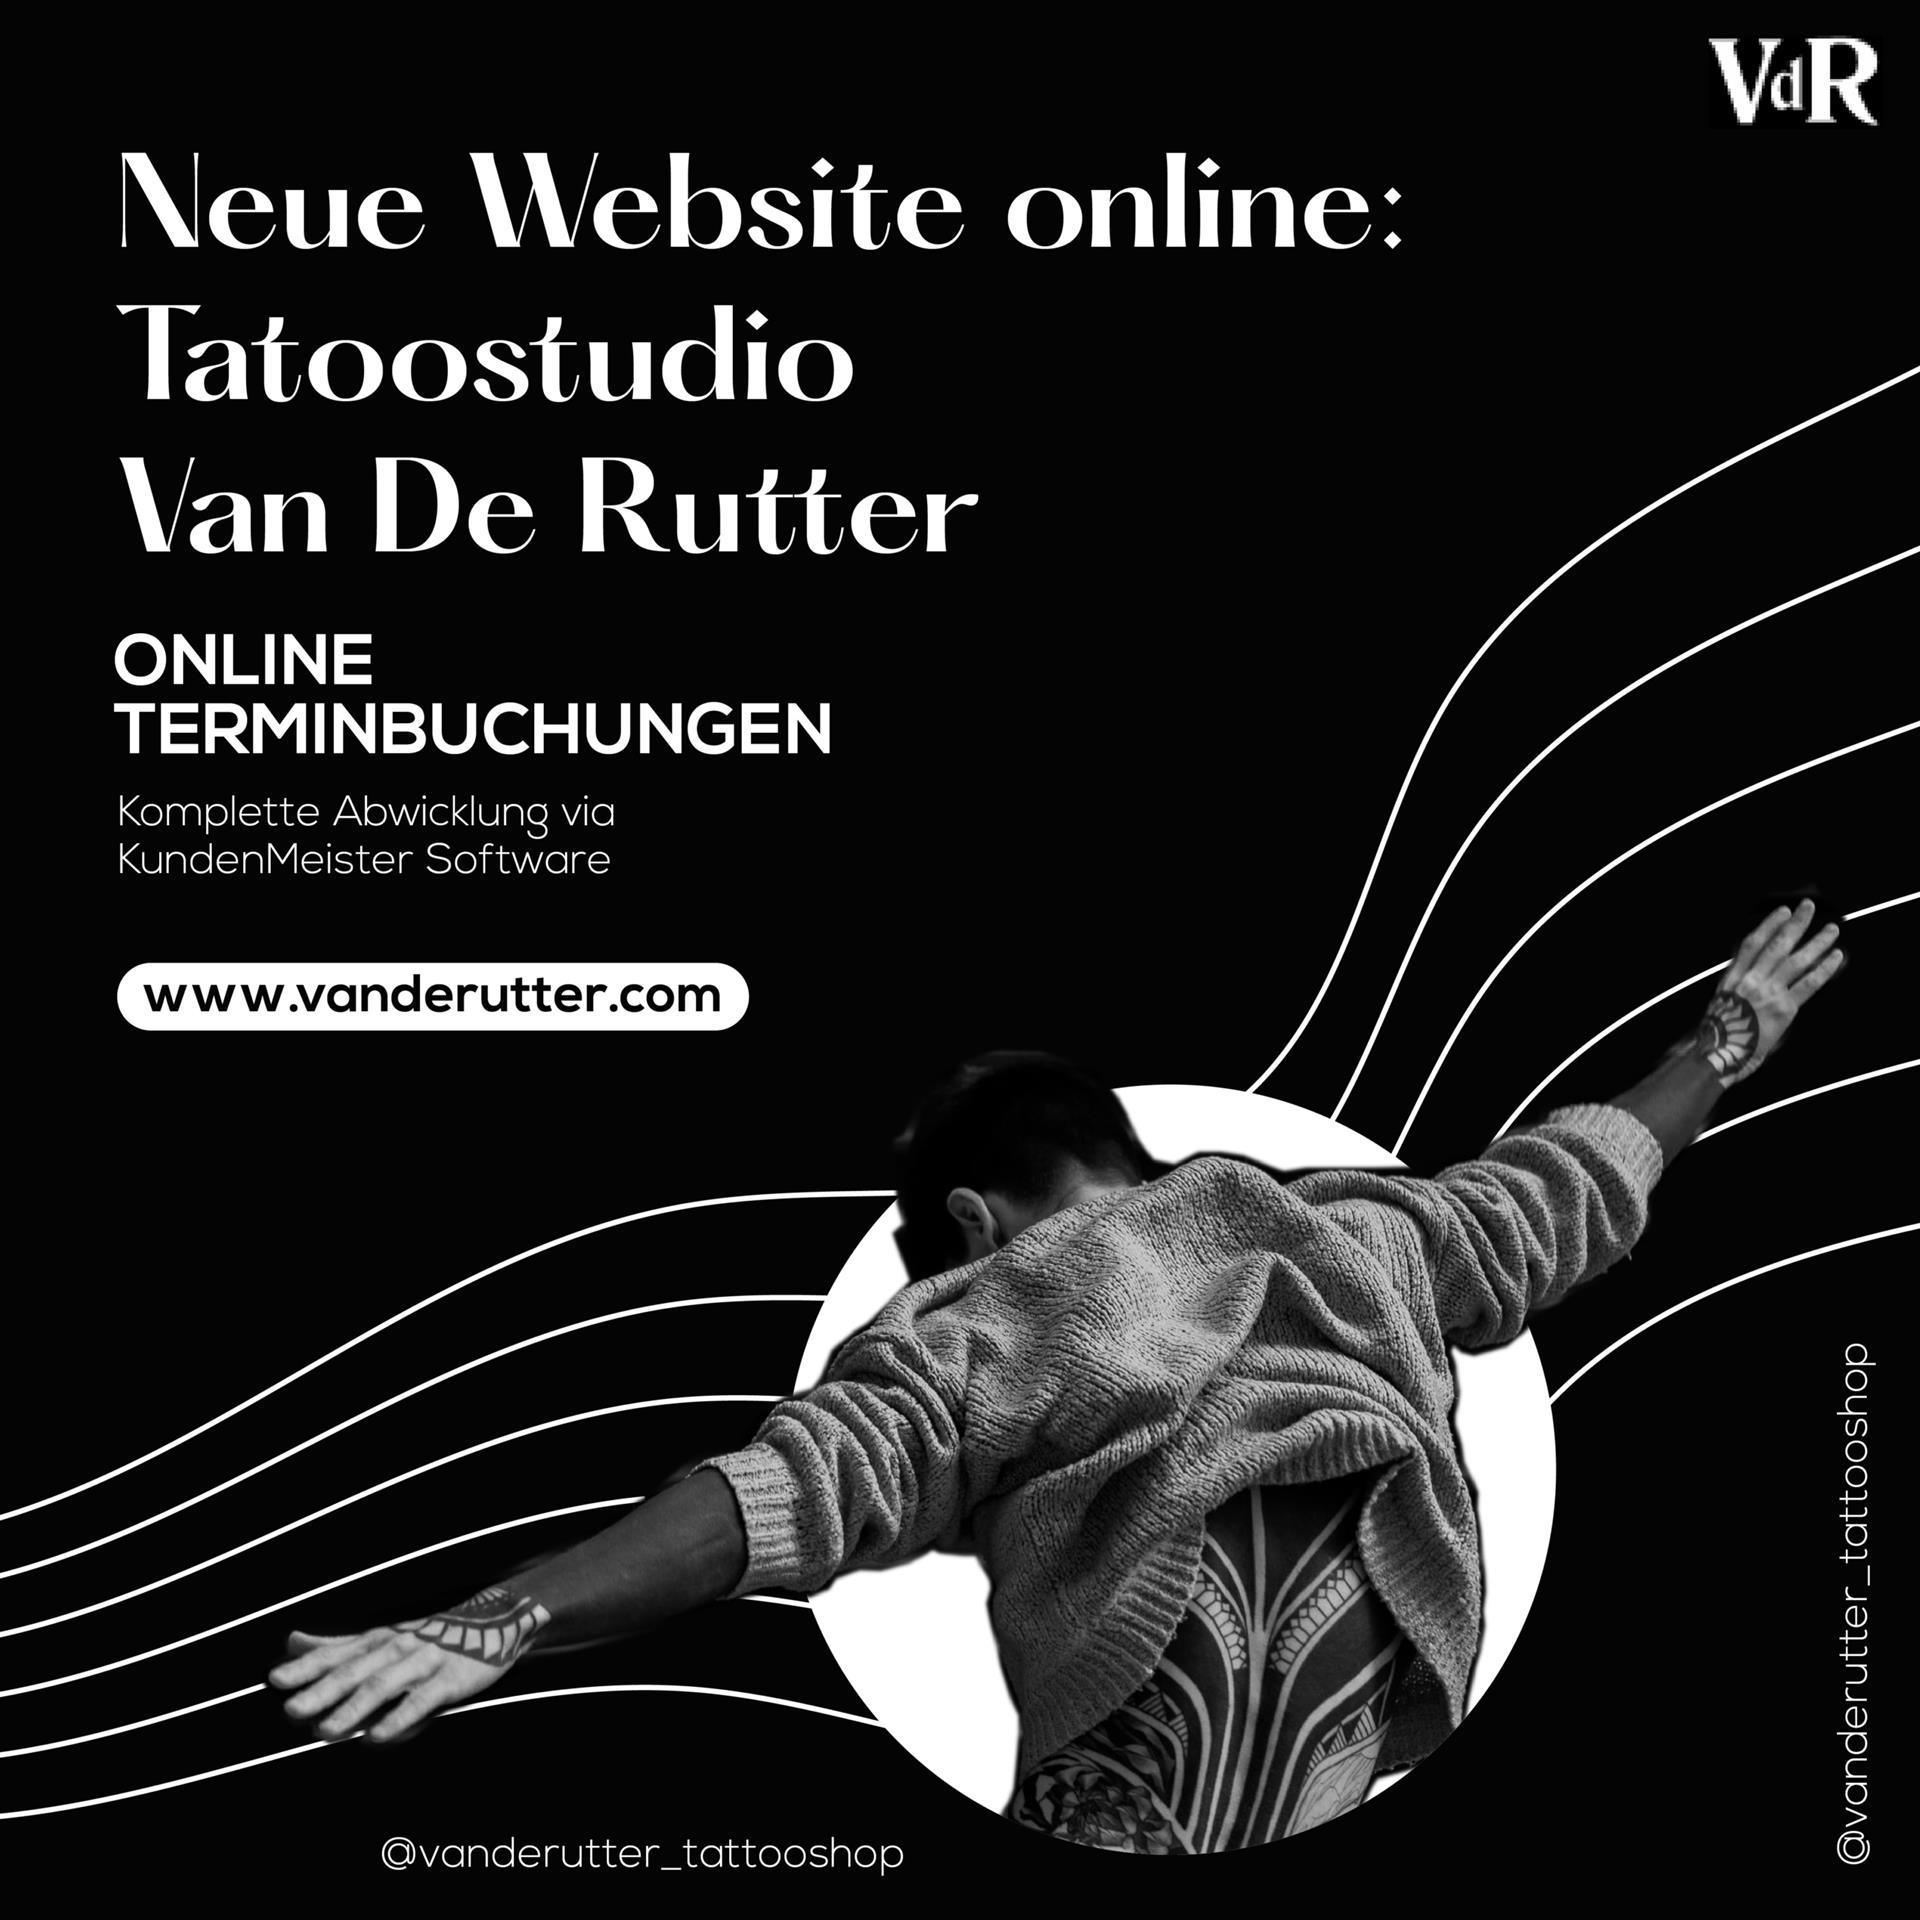 Новый сайт Ван де Раттера